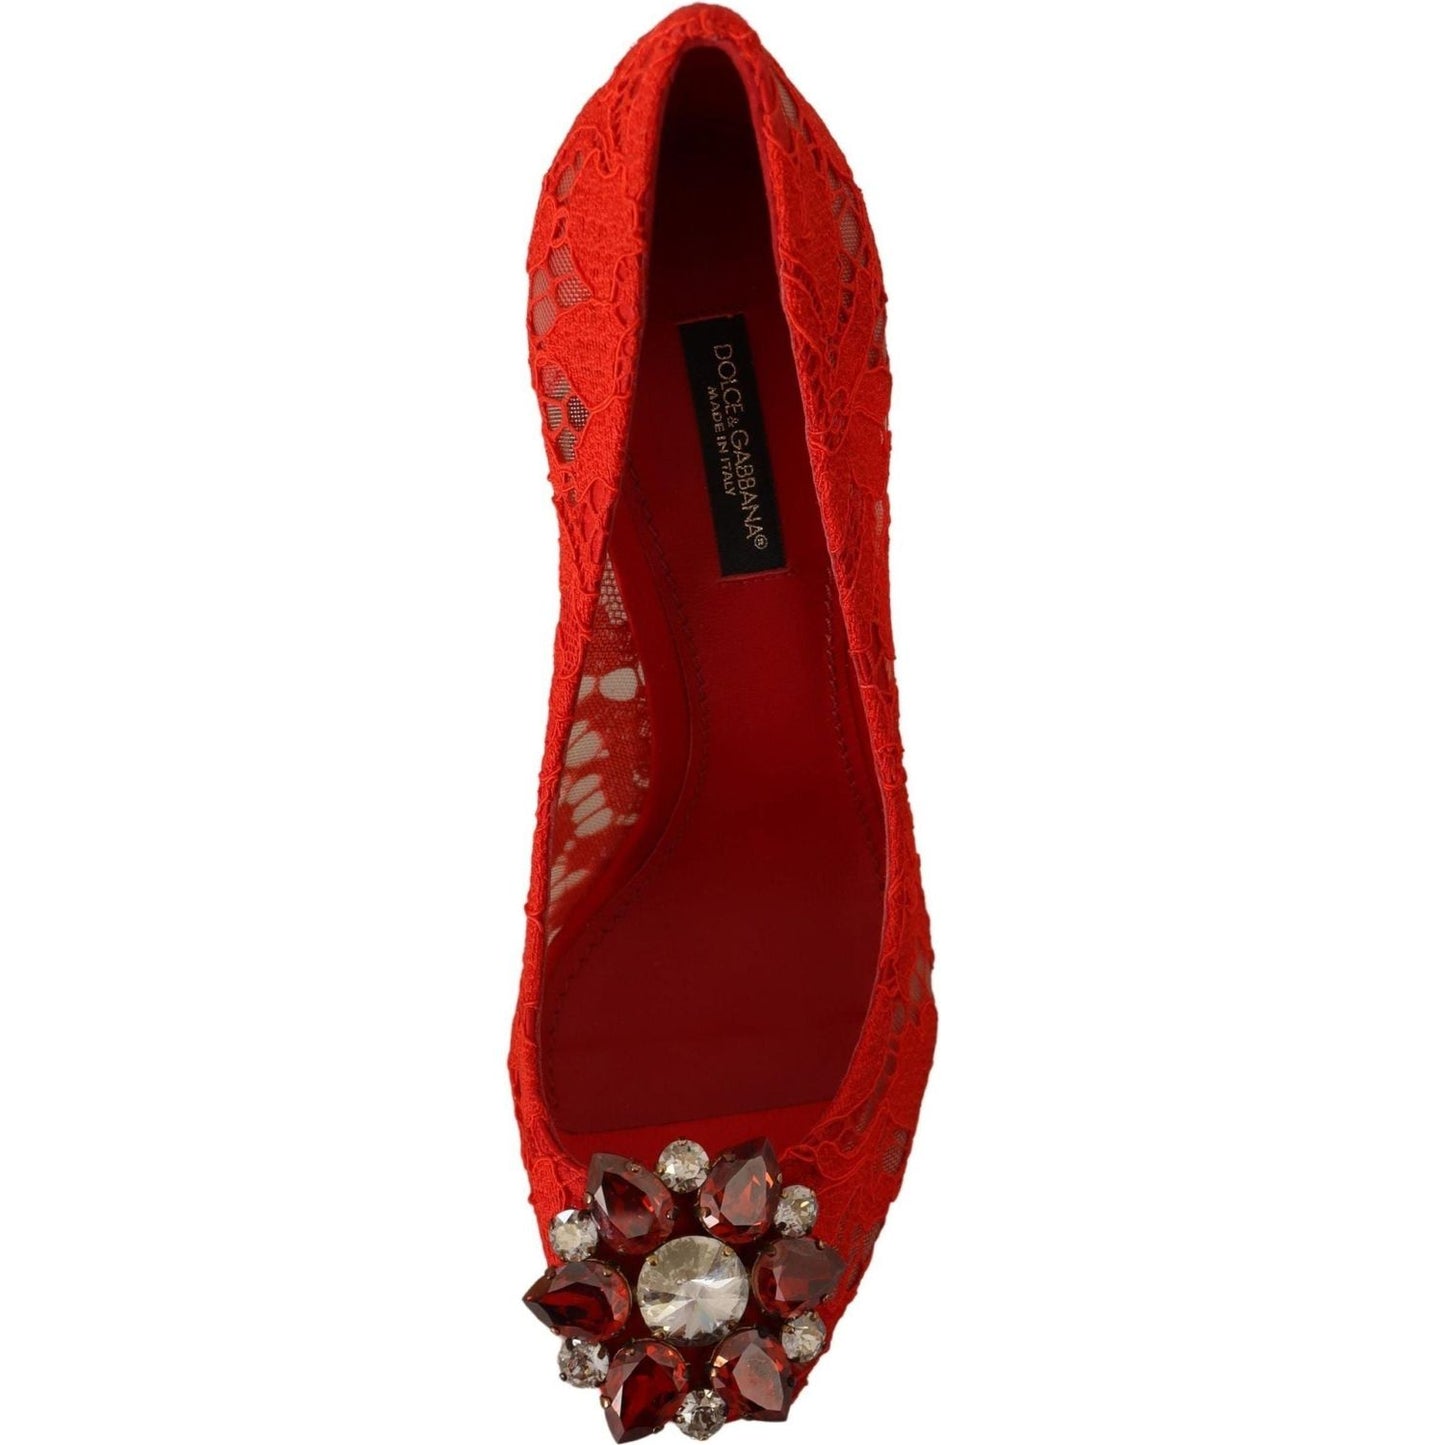 Dolce & Gabbana Red Crystal Taormina Lace Heels Pumps red-taormina-lace-crystal-heels-pumps IMG_0586-scaled-2f6e5088-a8e.jpg